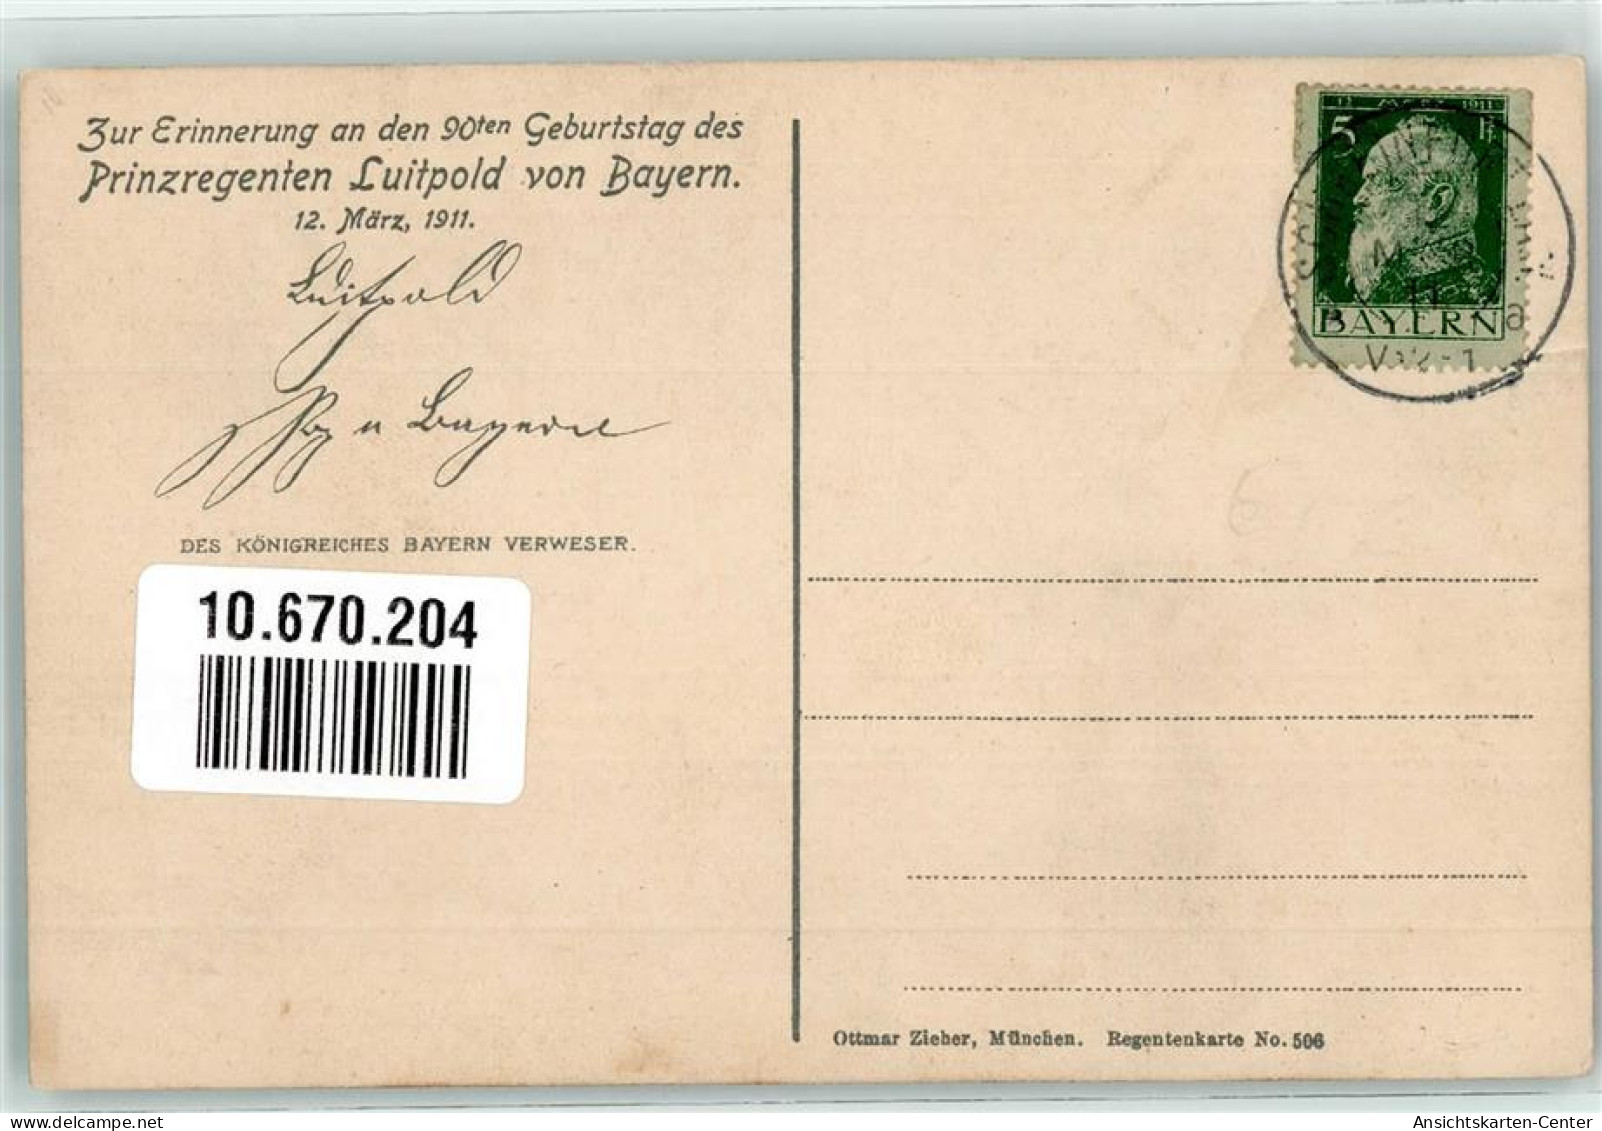 10670204 - Prinzregent Luitpold 90er Geburtstag Zieher, Ottmar Regentenkarte Nr.506 - Königshäuser